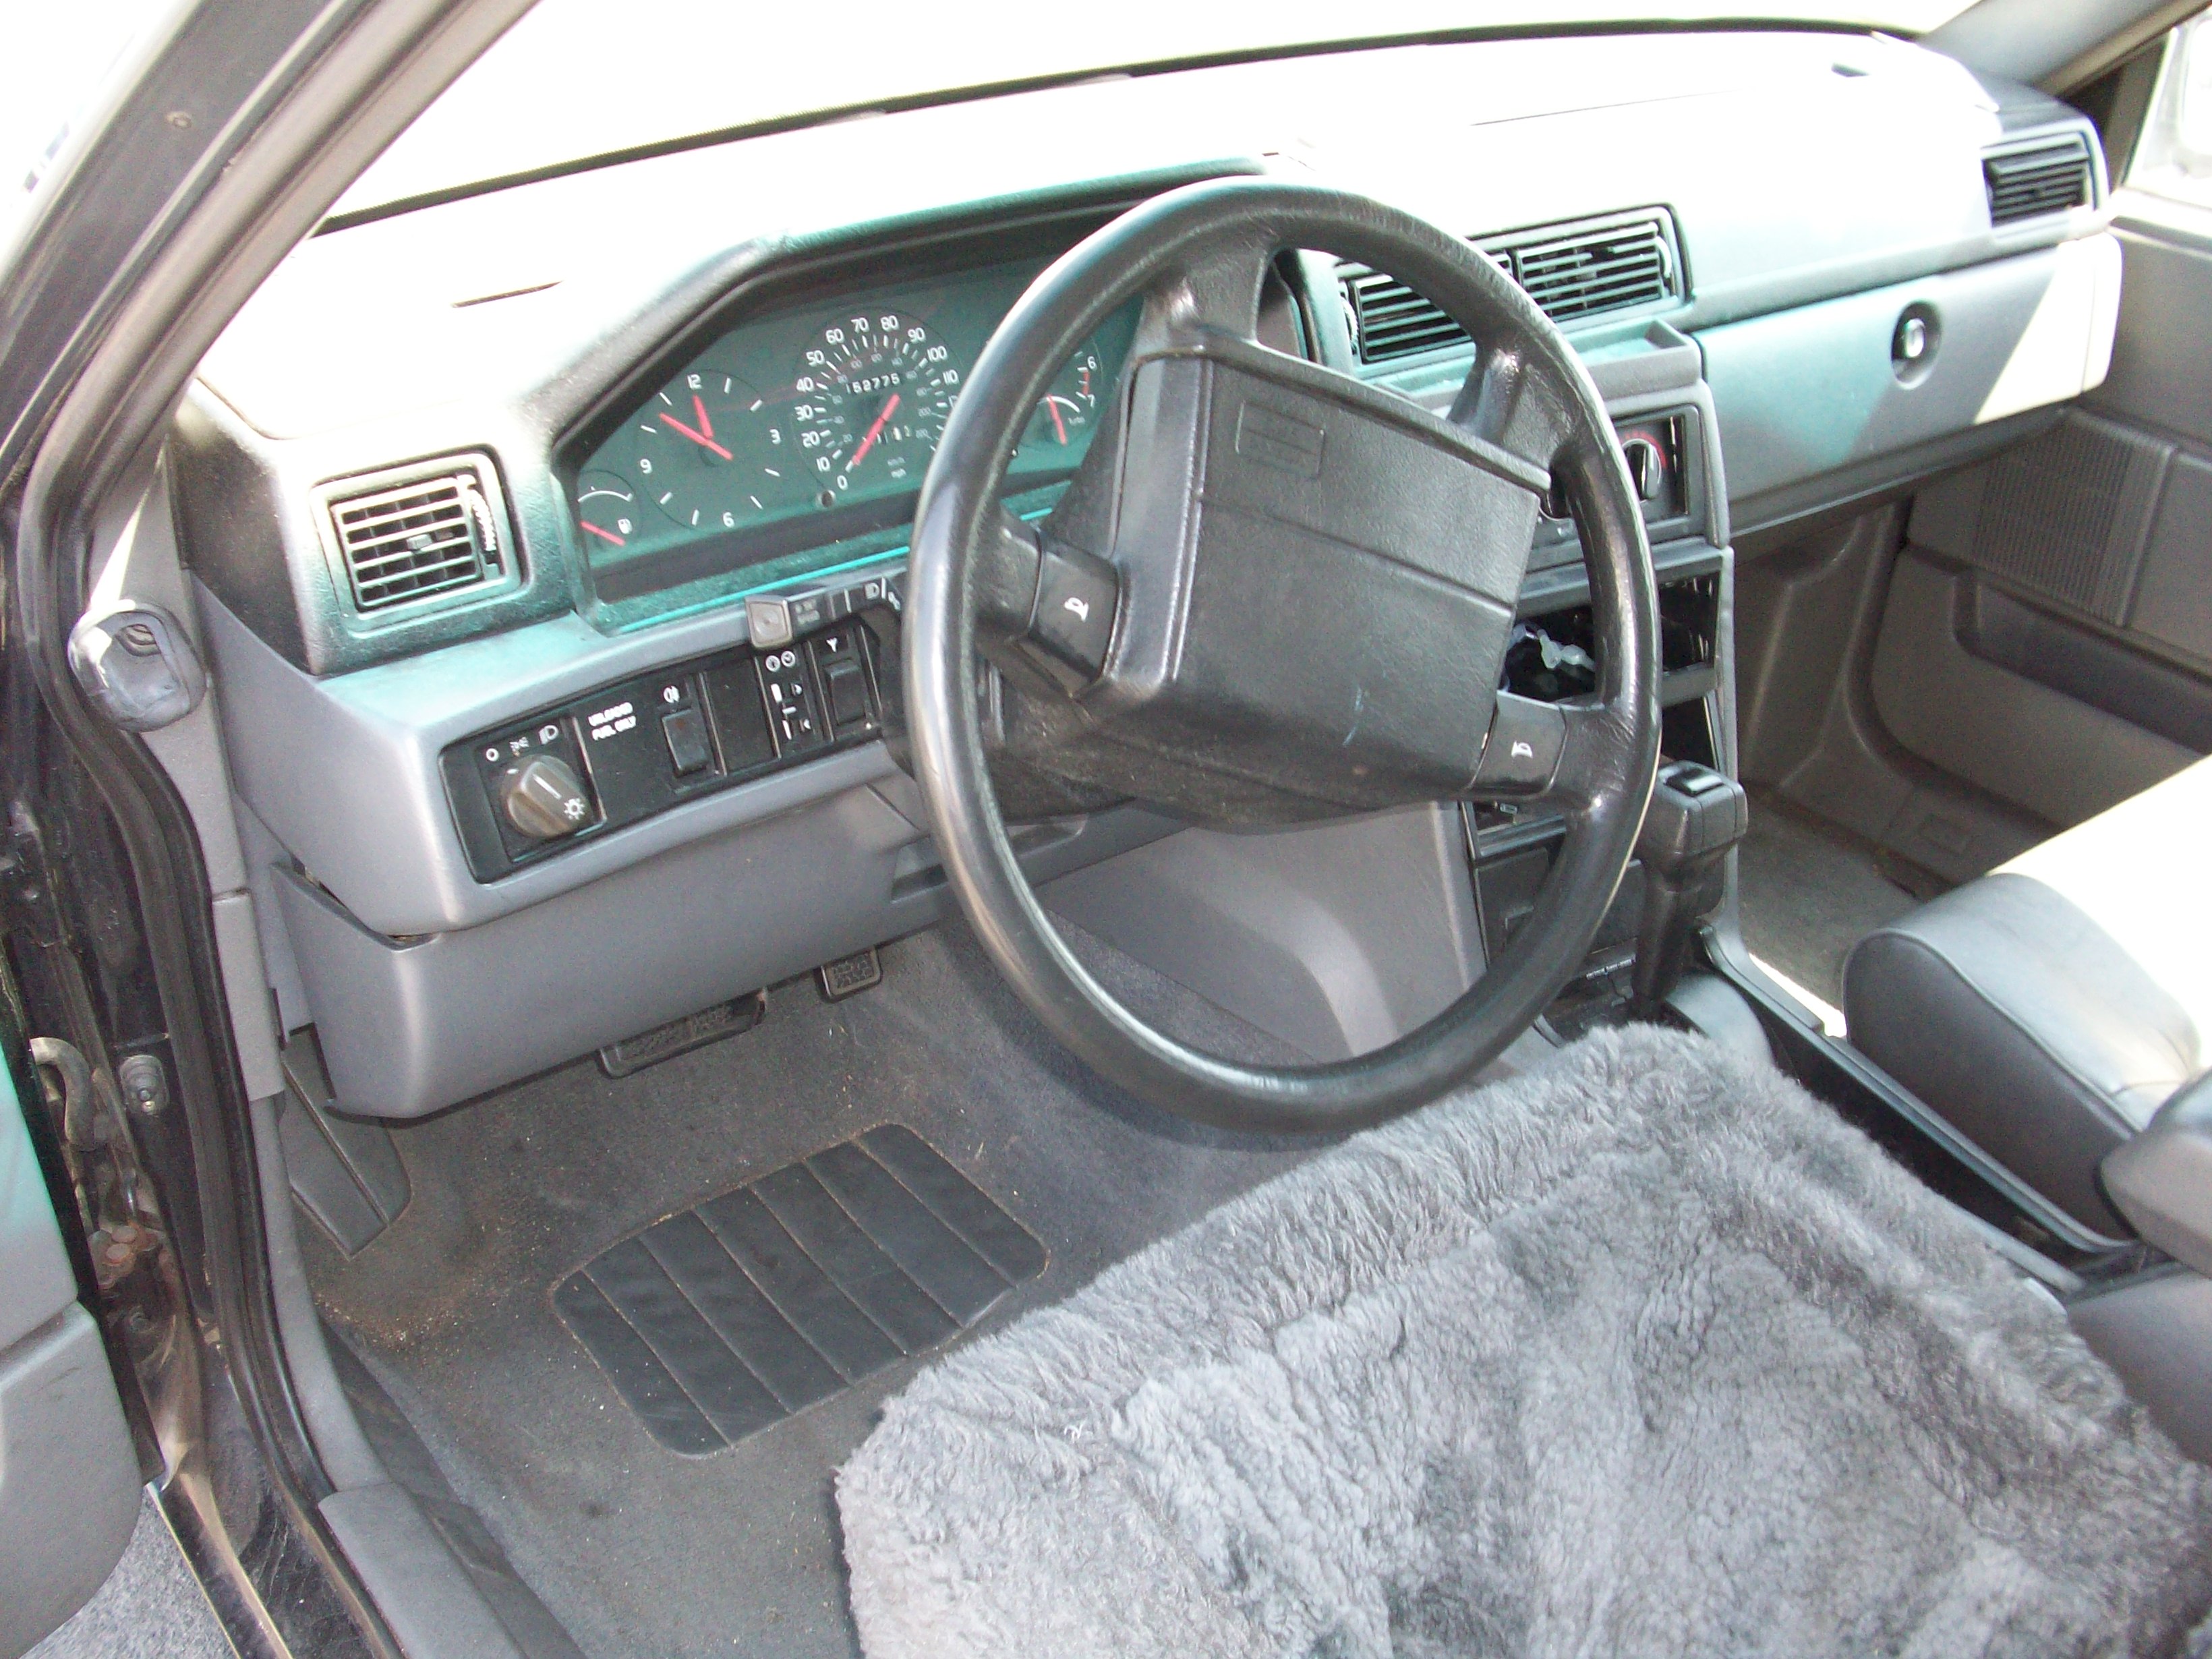 1992 Volvo 740 Wagon $1400